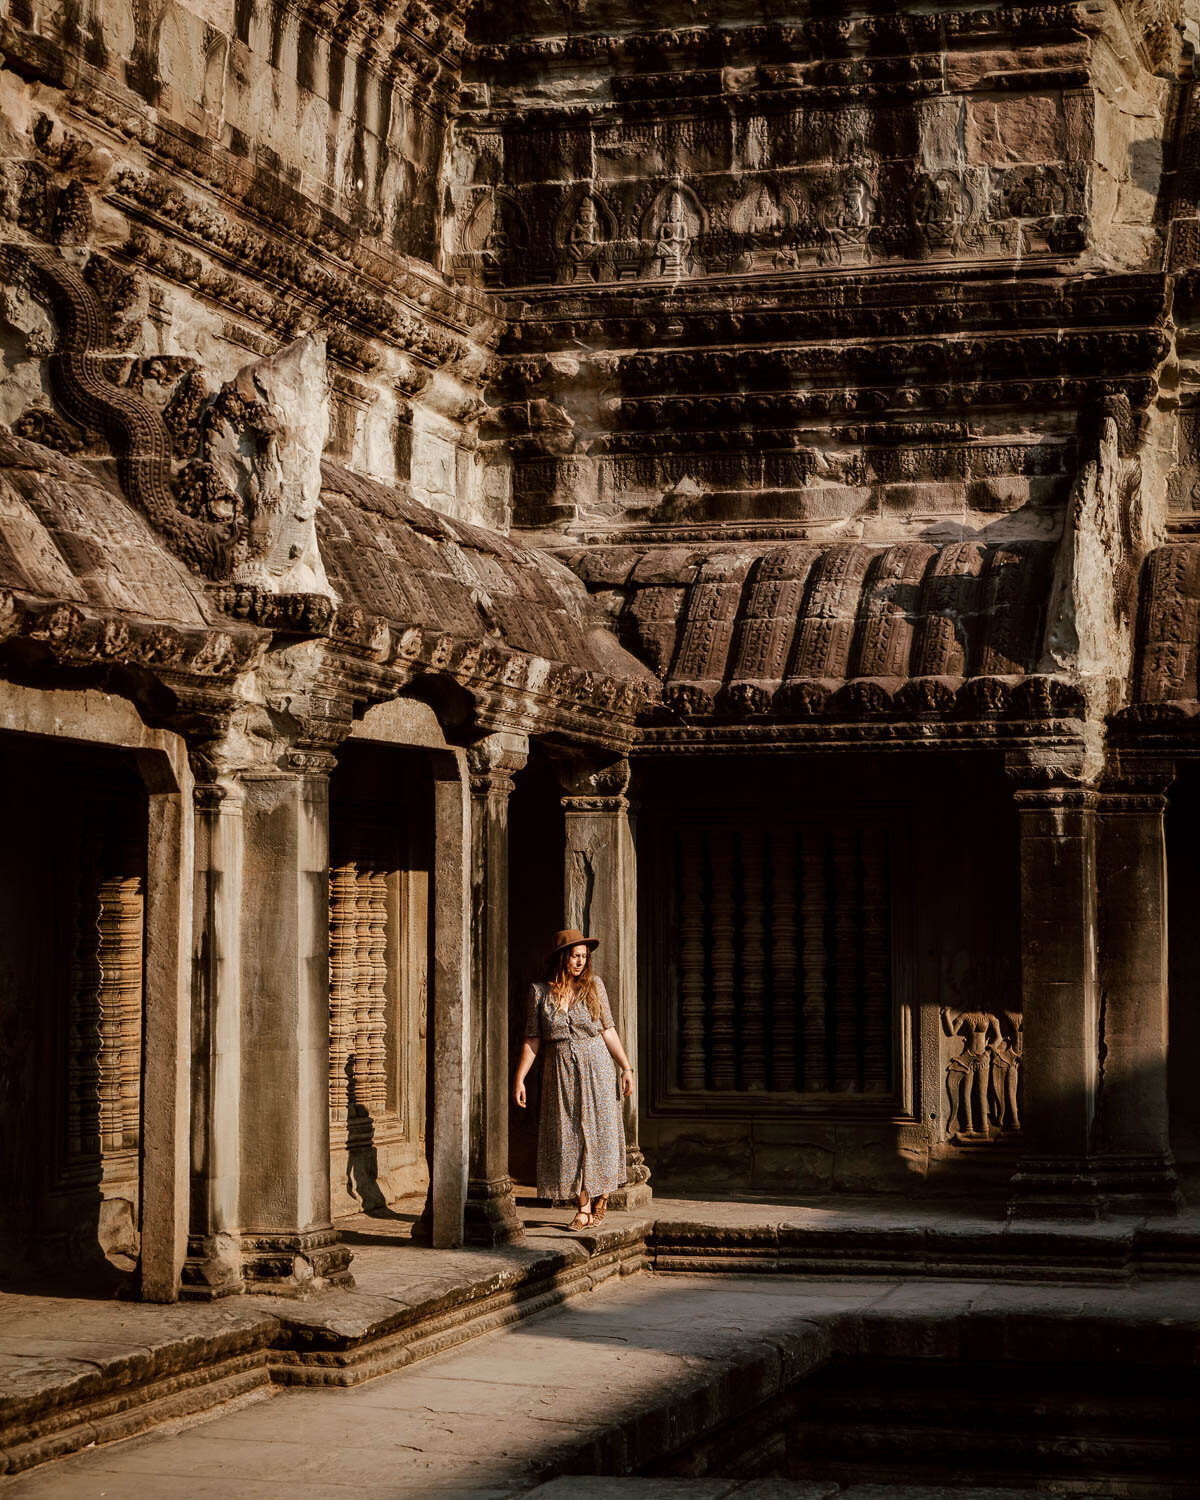 Explore Angkor Wat, Cambodia